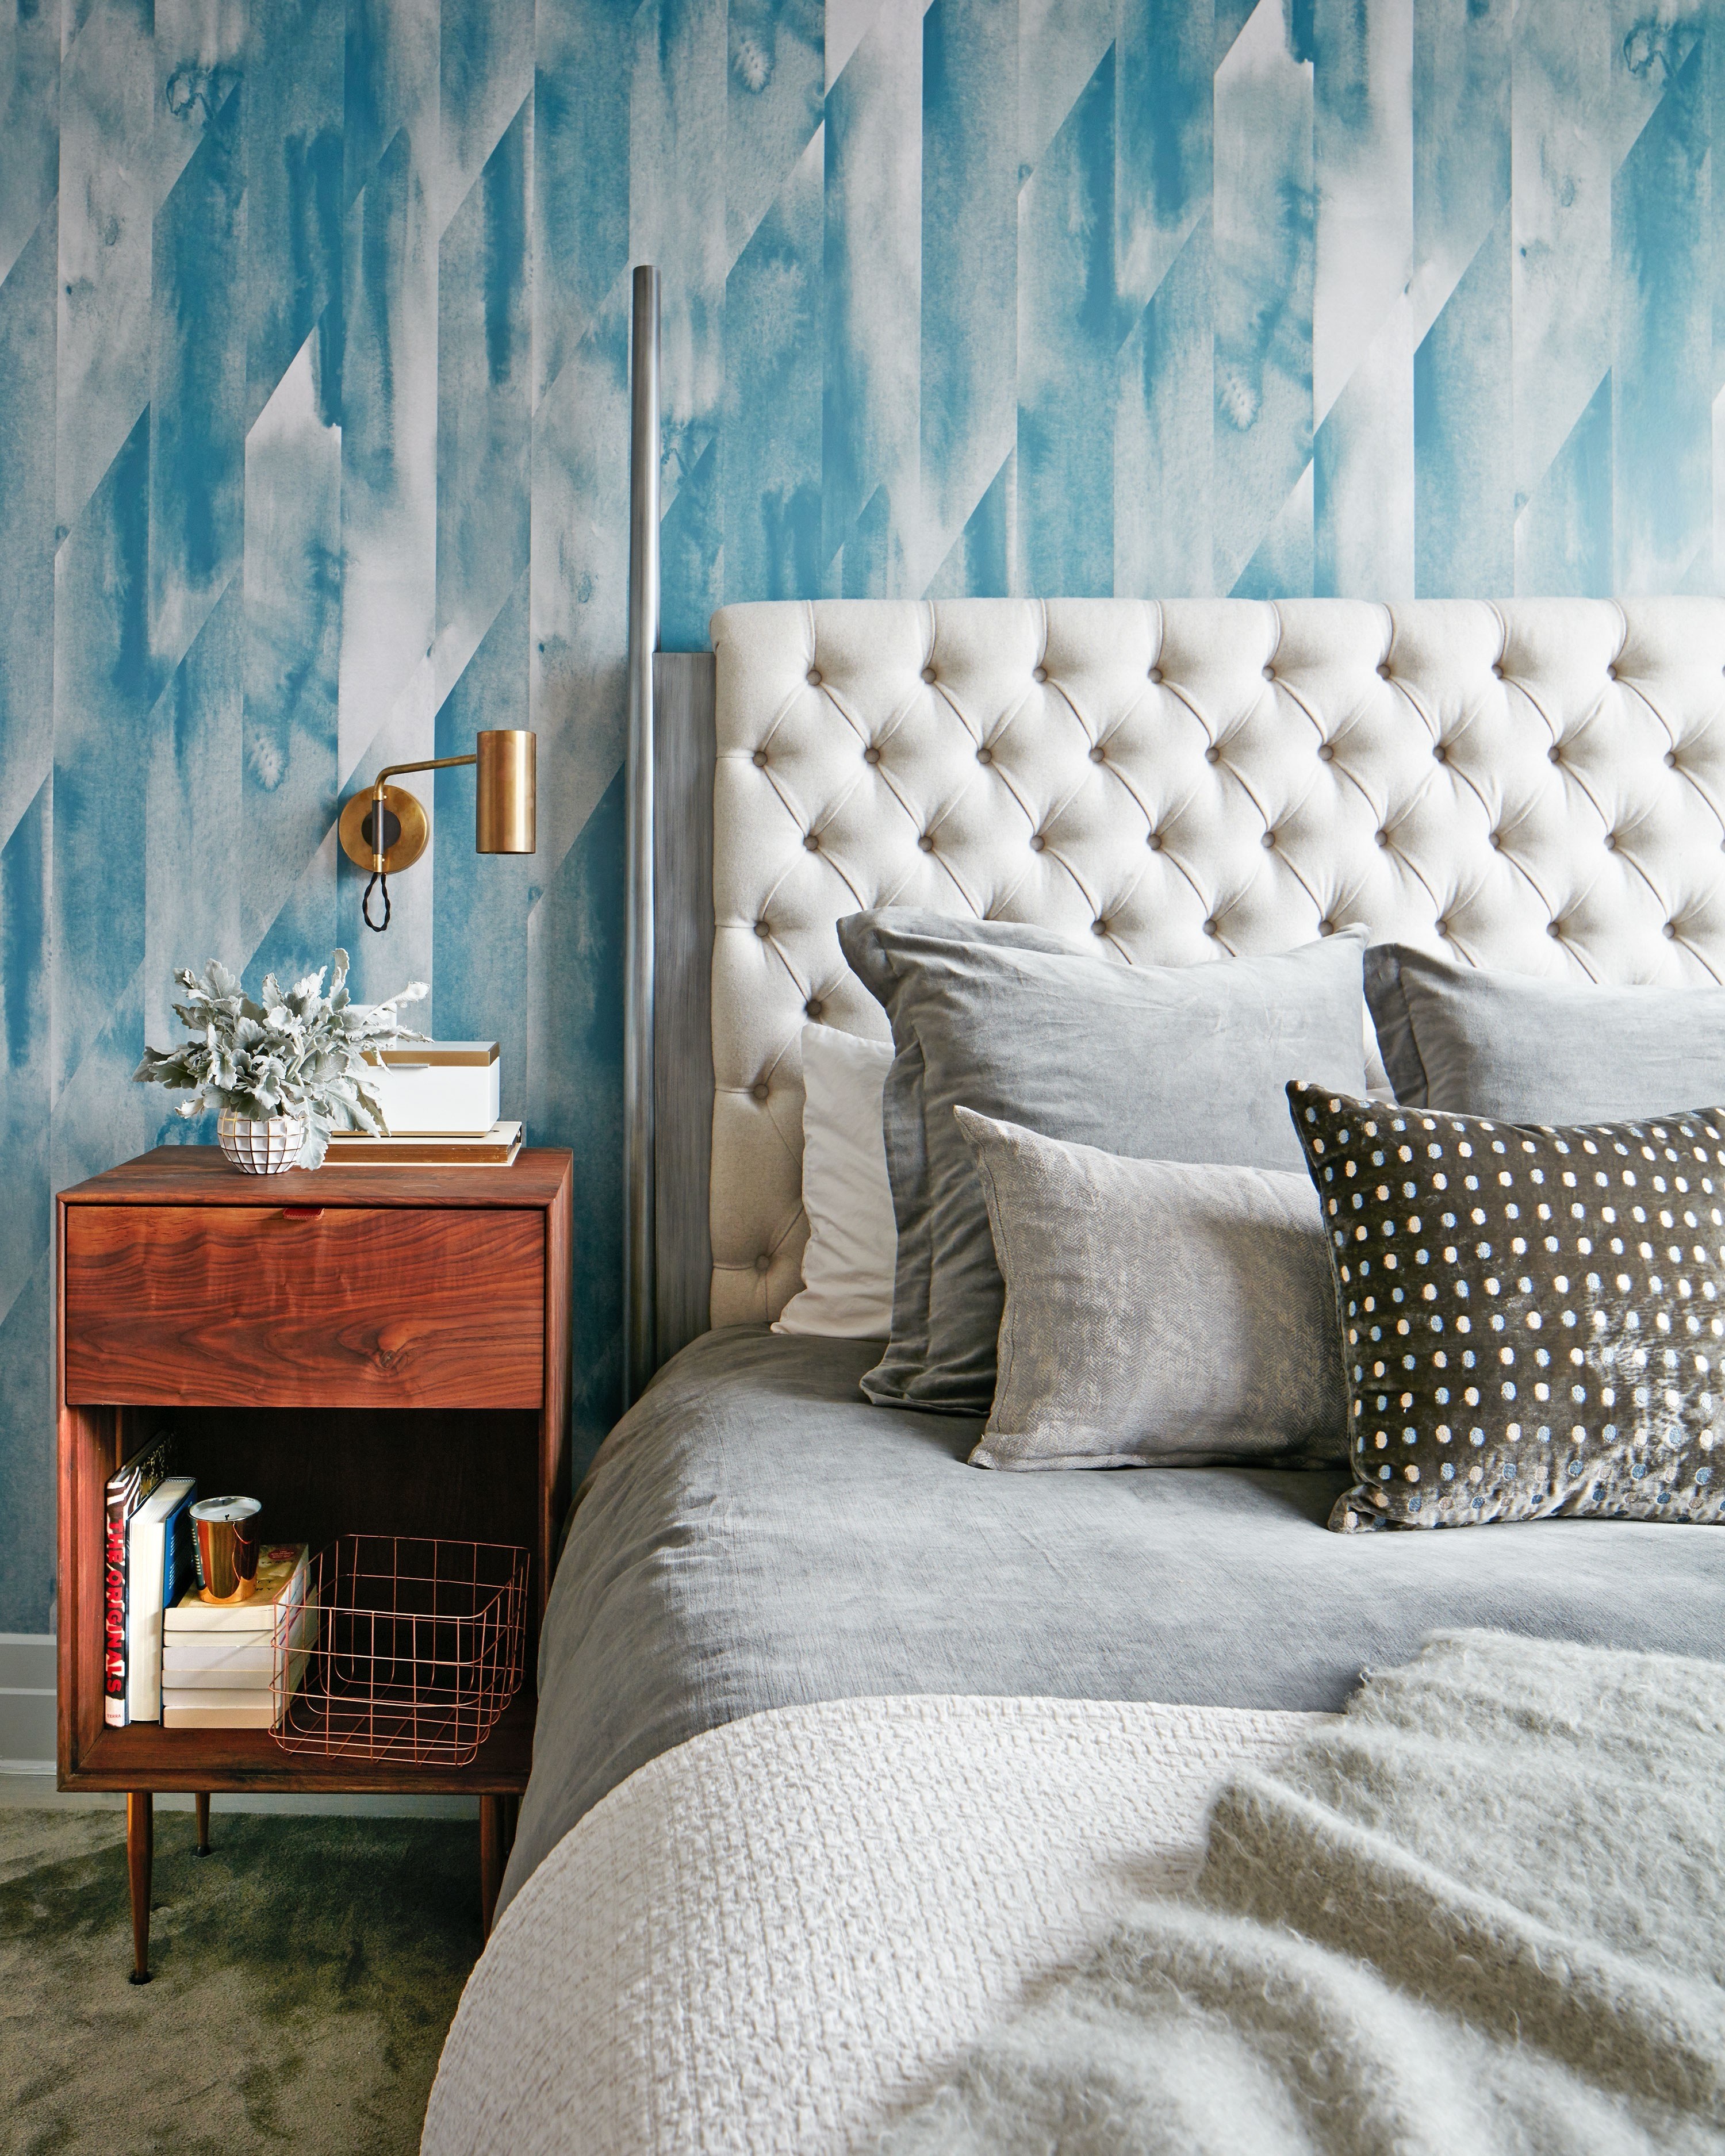 wallpaper home decor,bedroom,furniture,room,wall,bed